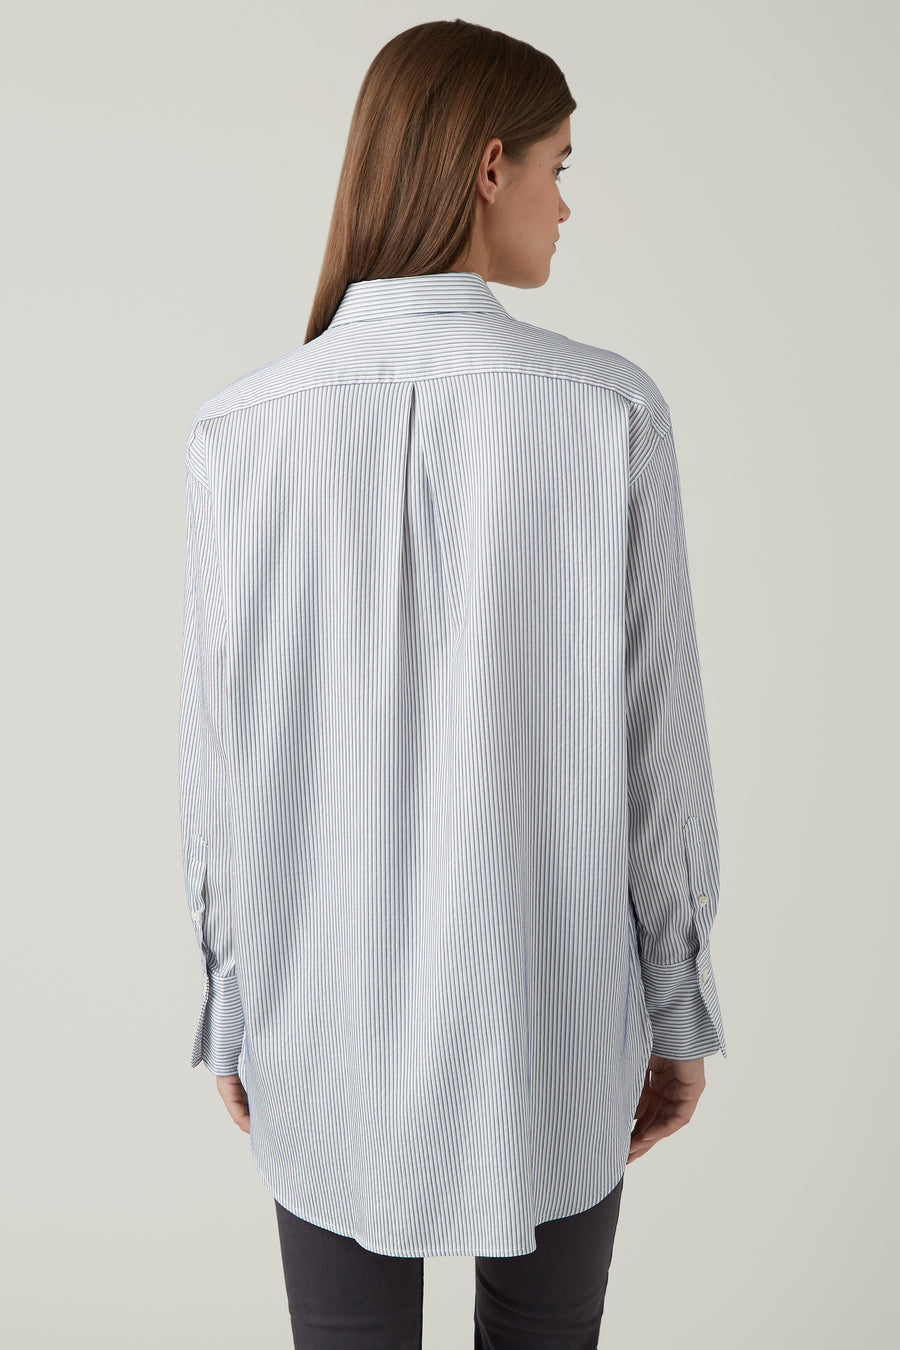 Oversized Nicole Stripe Taylor Silk/Cotton Steel Farhi – Shirt